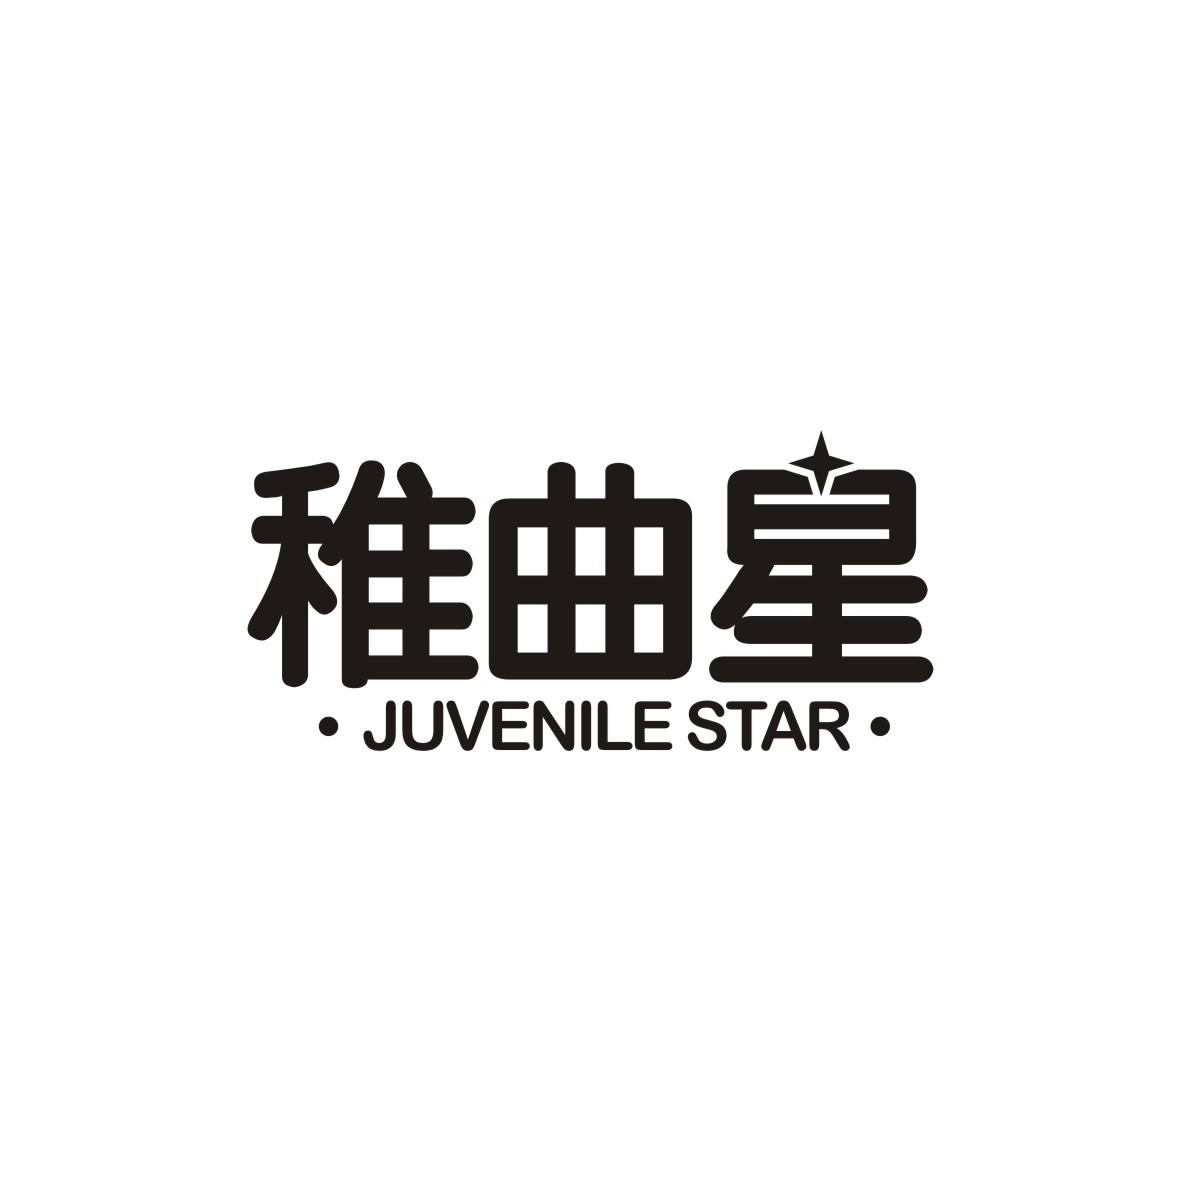 稚曲星 JUVENILE STAR